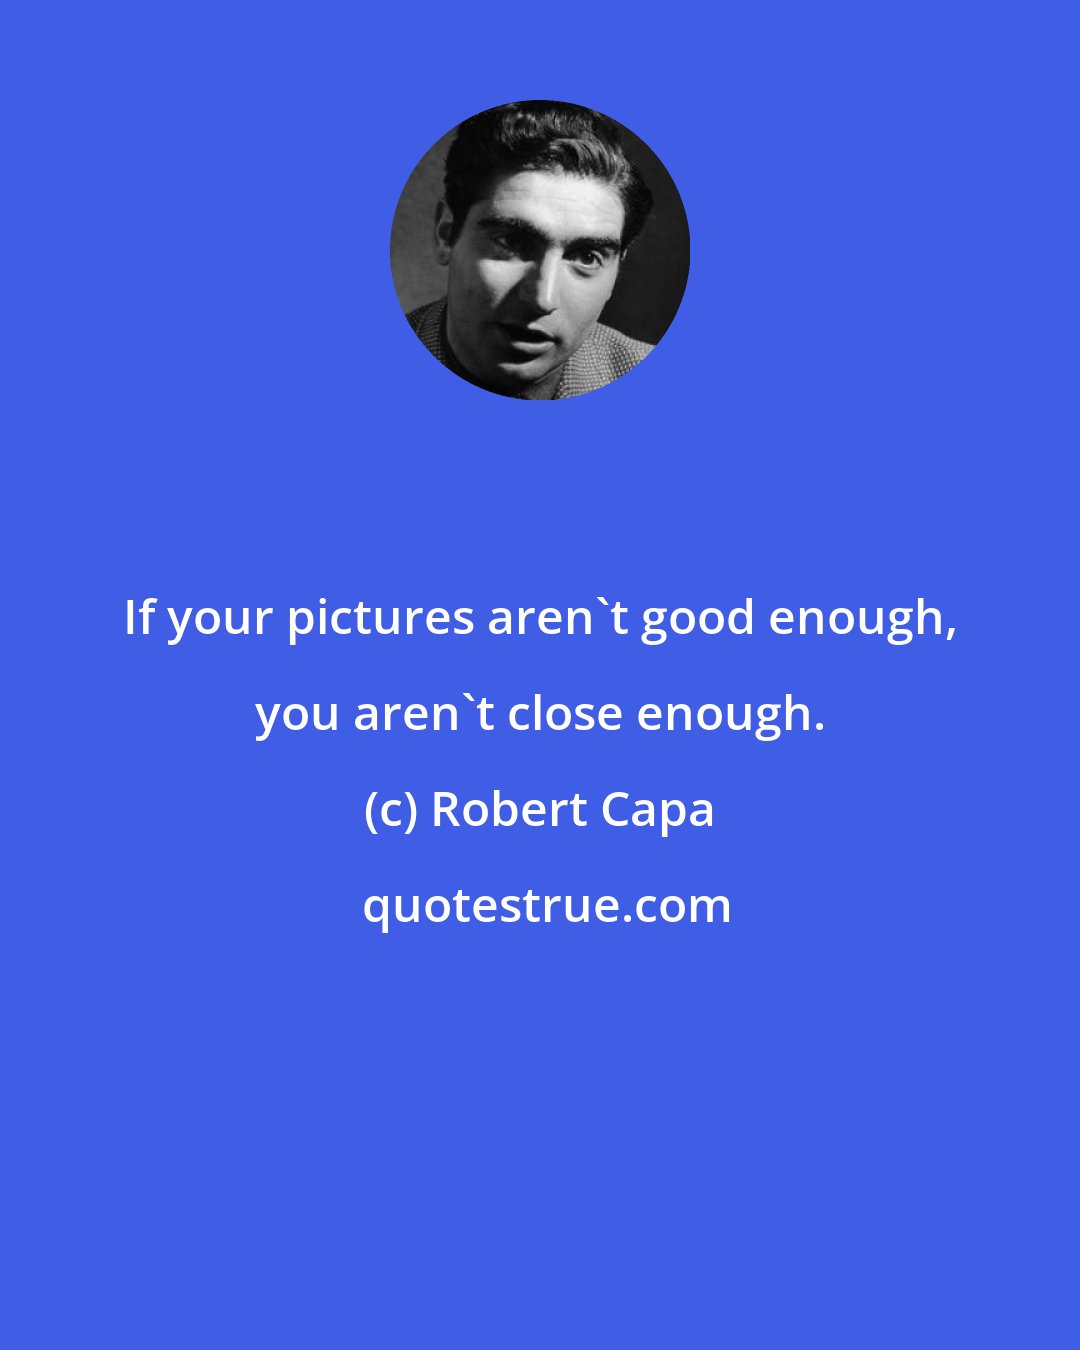 Robert Capa: If your pictures aren't good enough, you aren't close enough.